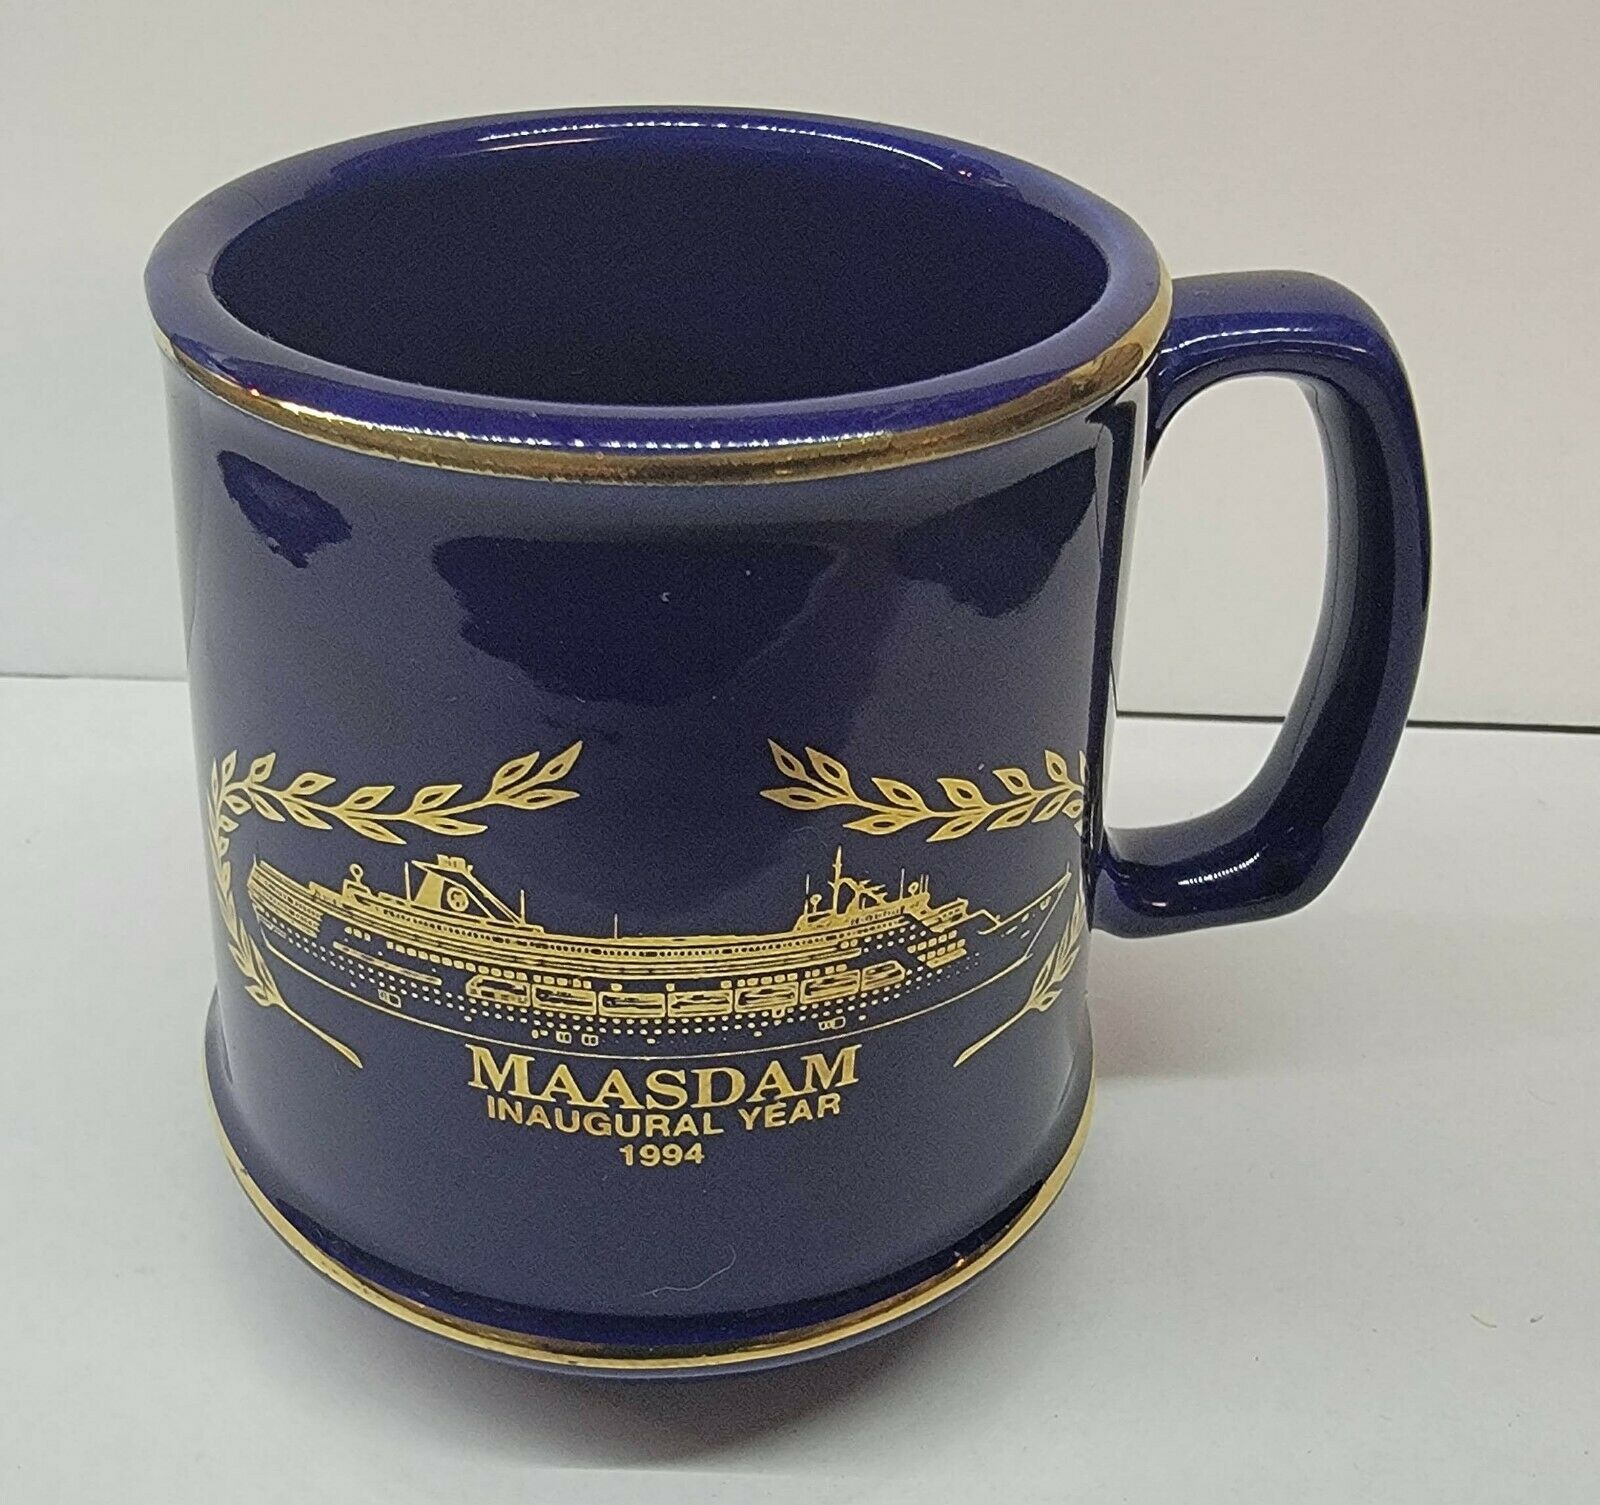 Ms Maasdam 1994 Inaugural Year Blue & Gold Coffee cup  Mug Holland America Line